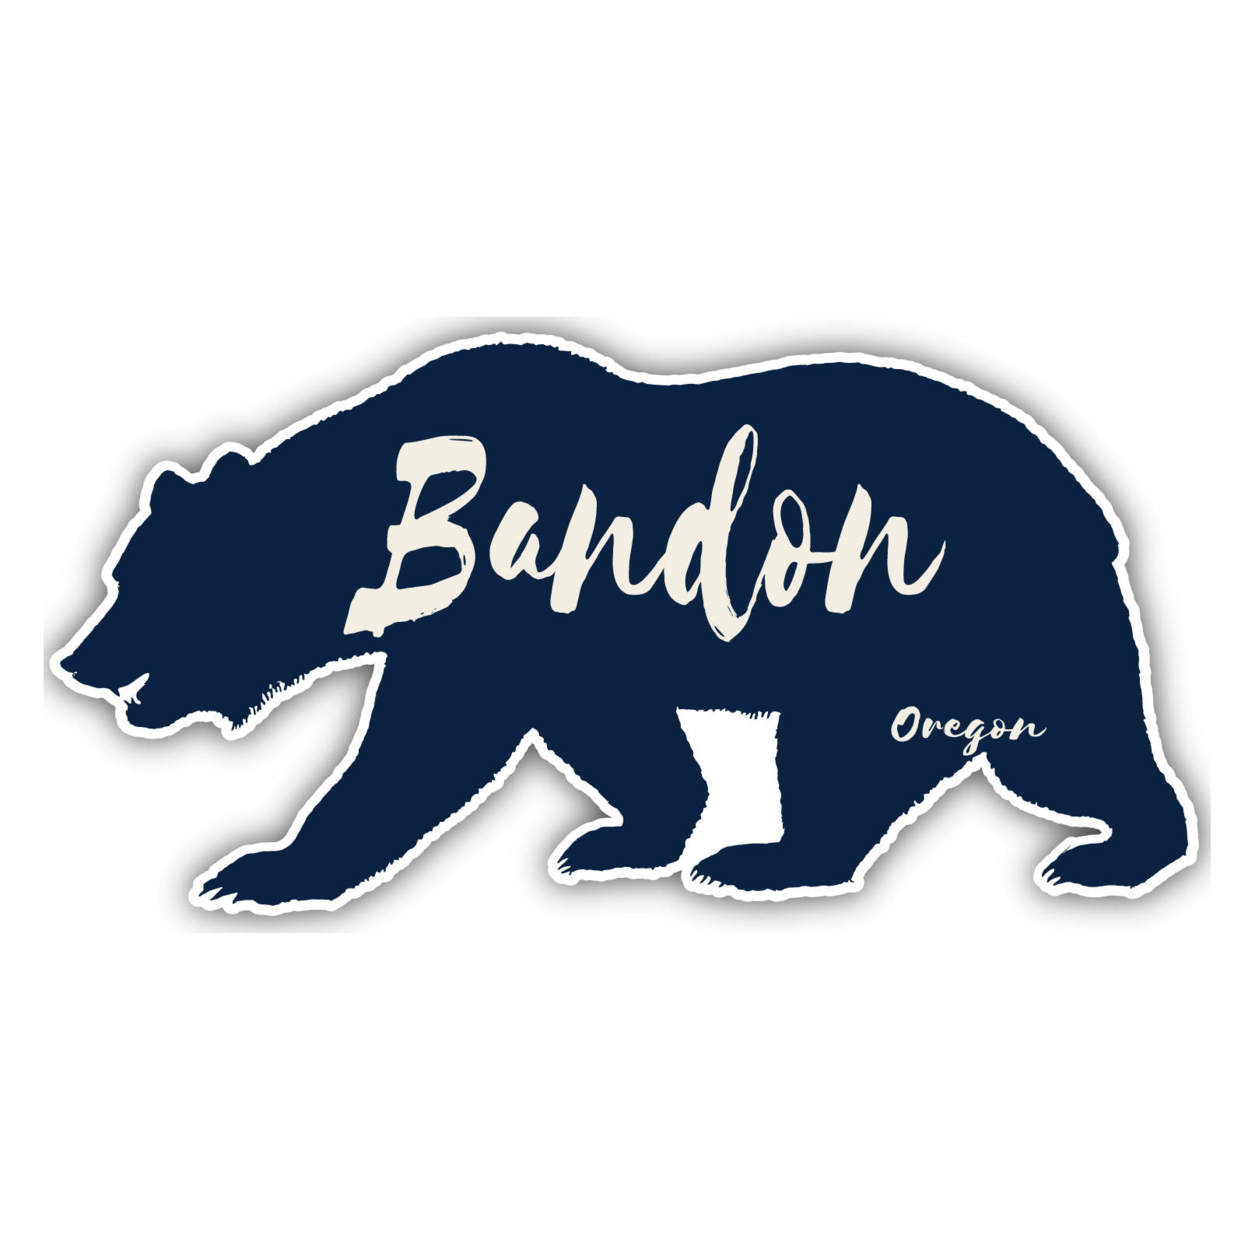 Bandon Oregon Souvenir Decorative Stickers (Choose Theme And Size) - Single Unit, 12-Inch, Camp Life